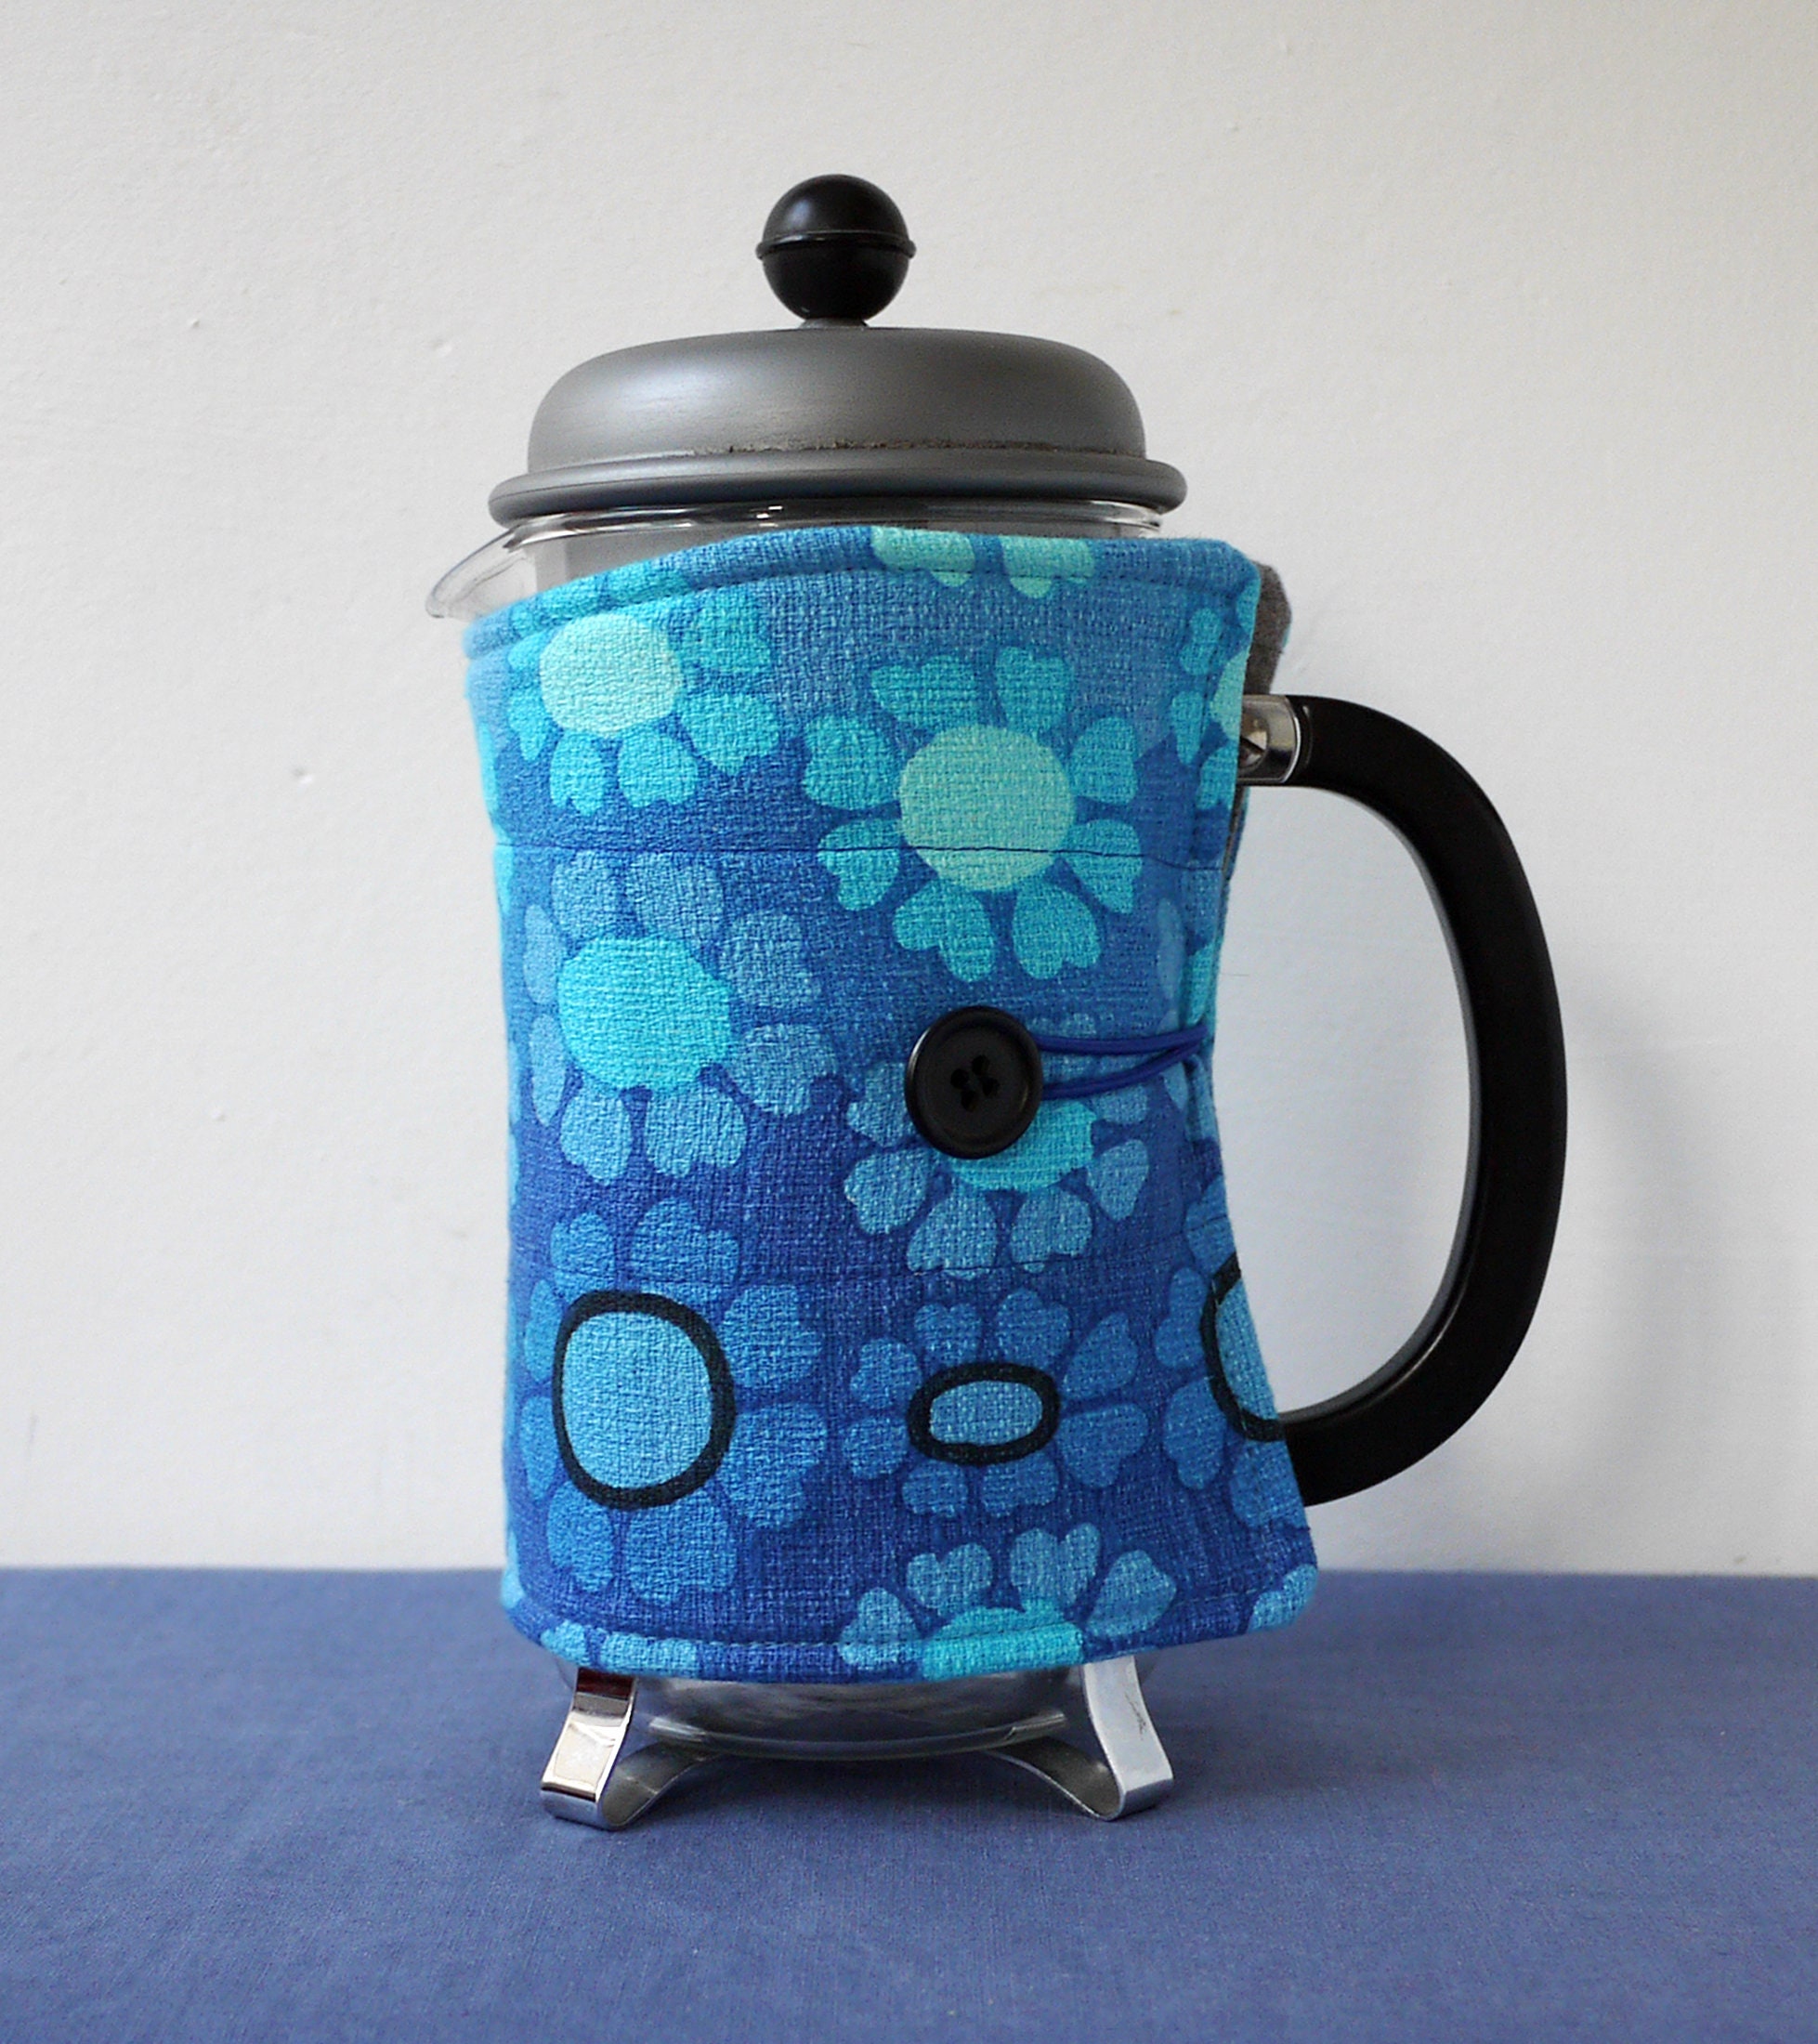 Pour Over Coffee Pot Like Chemex Bodum Crochet Cozy Textured